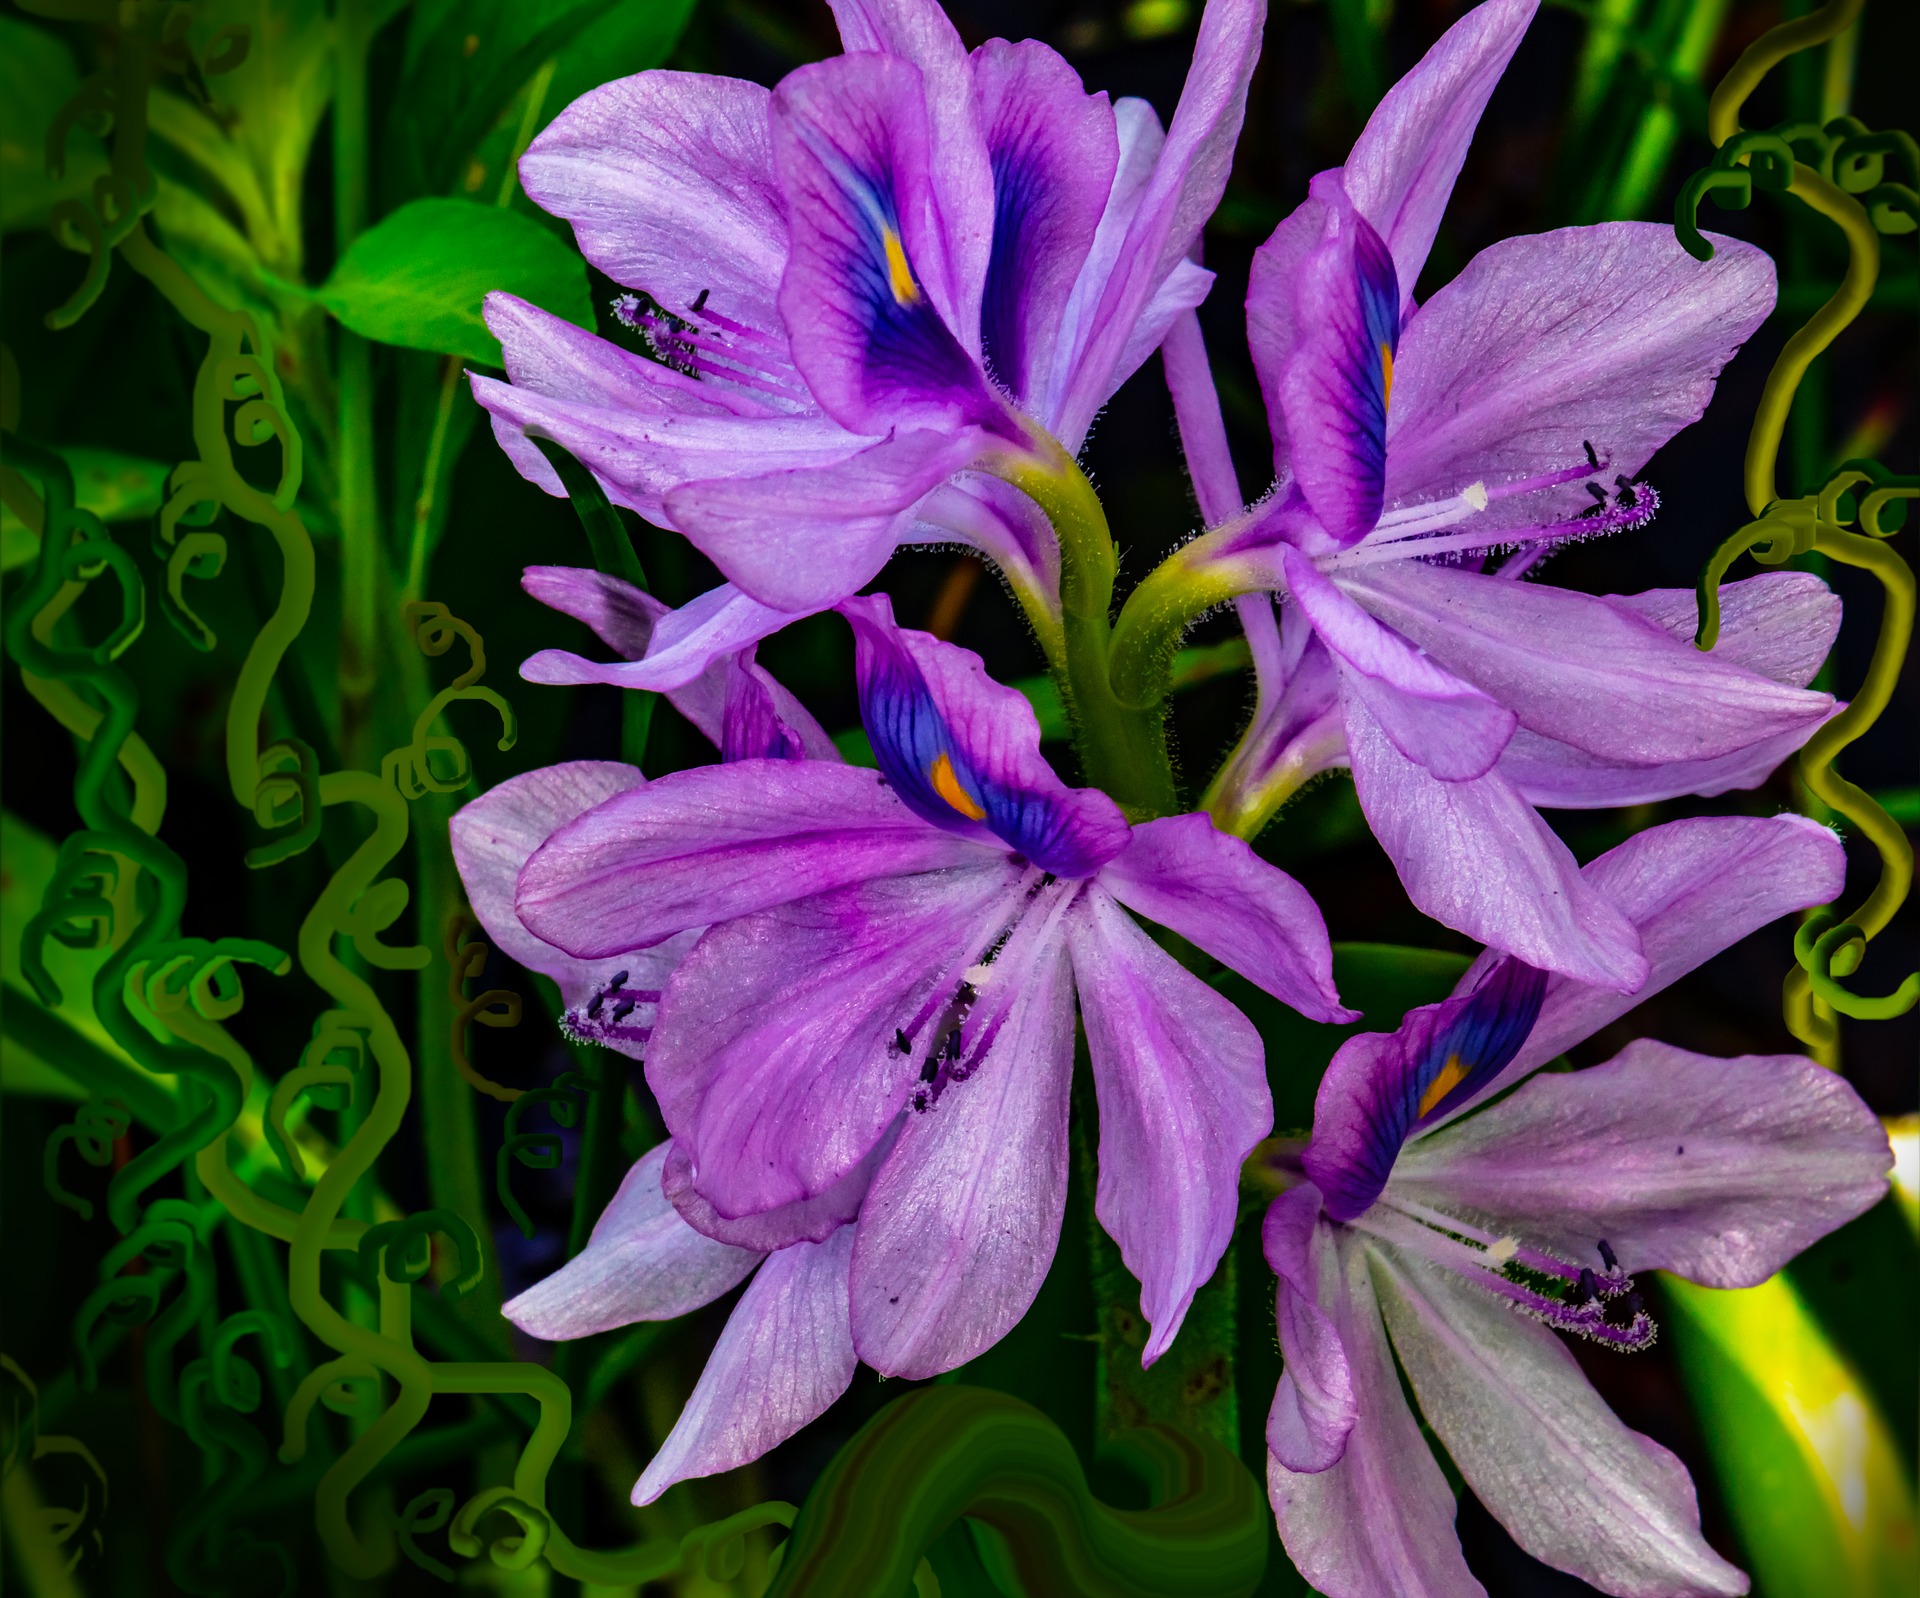 Purple flowers of iris